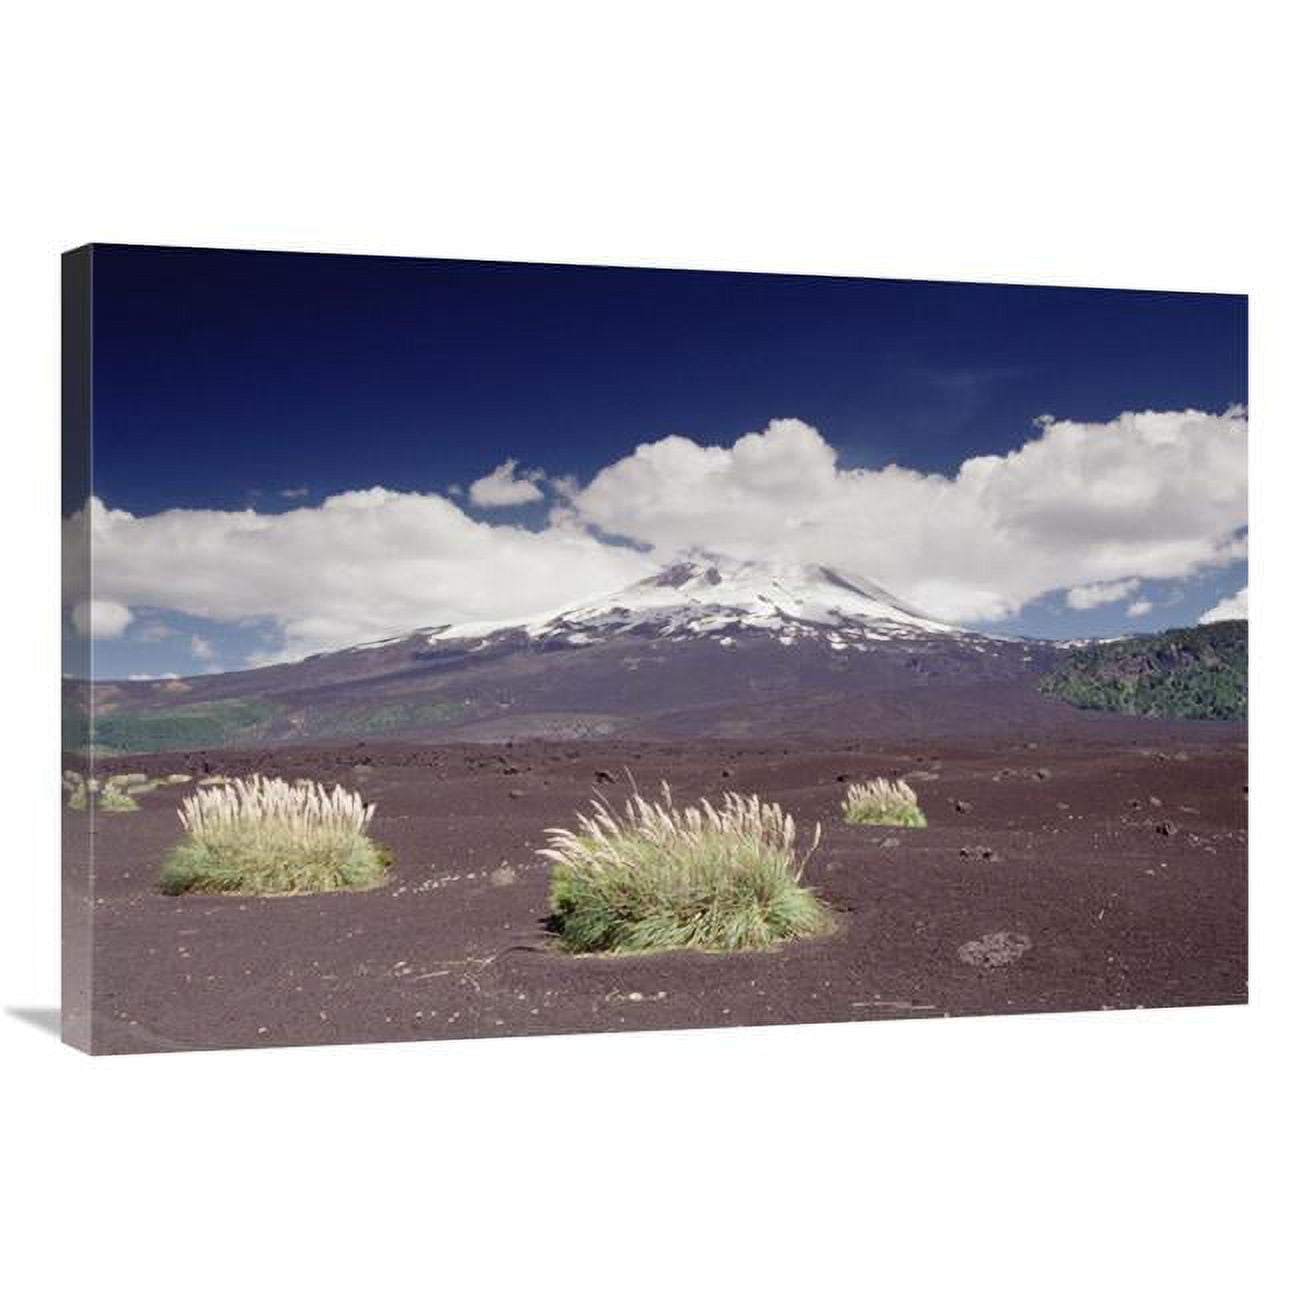 24 x 36 in. Pampas Grass Islands in Old Lava Flowl Llaima Volcano, Conguillio NP, Chile Art Print - Gerry Ellis -  JensenDistributionServices, MI1264959